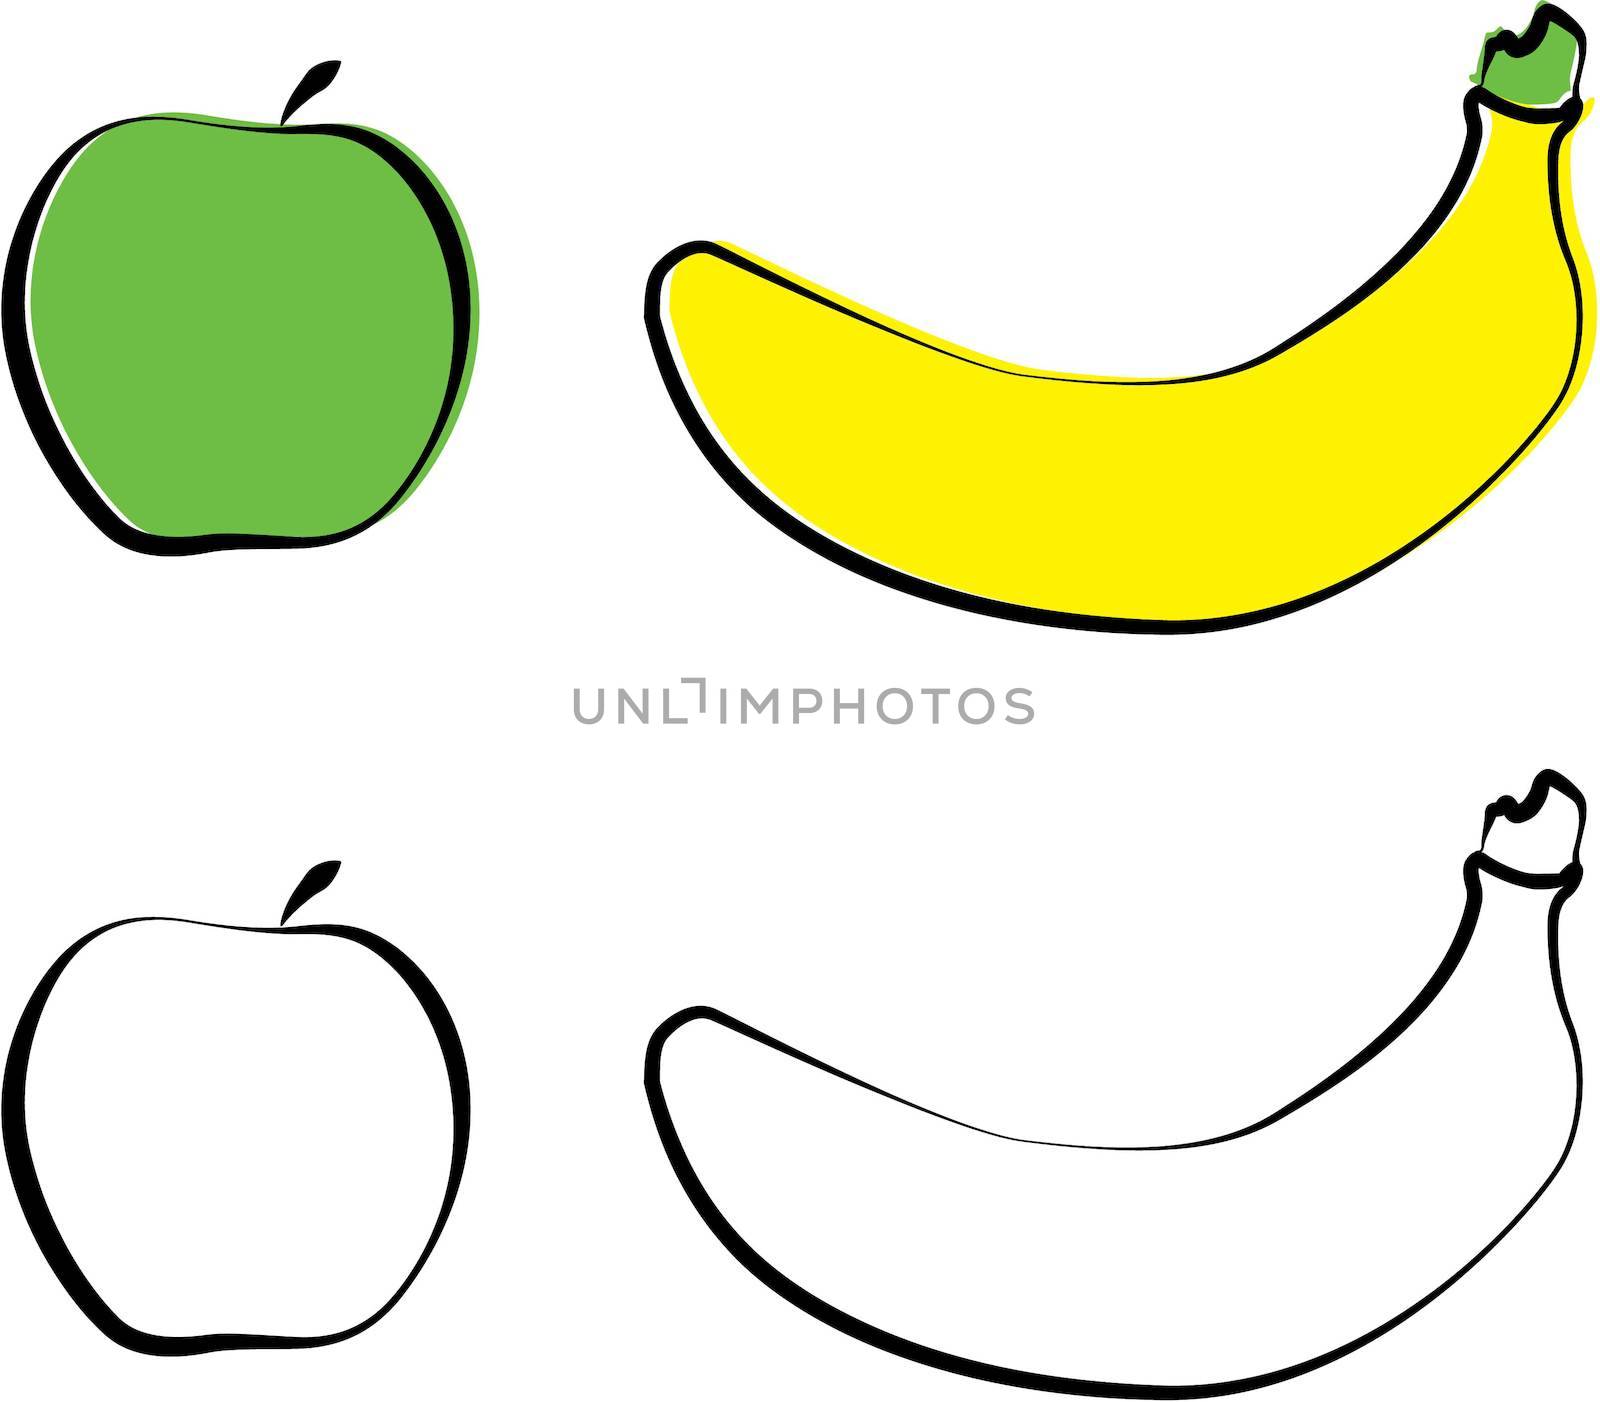 Illustration of Apple and Banana by DragonEyeMedia